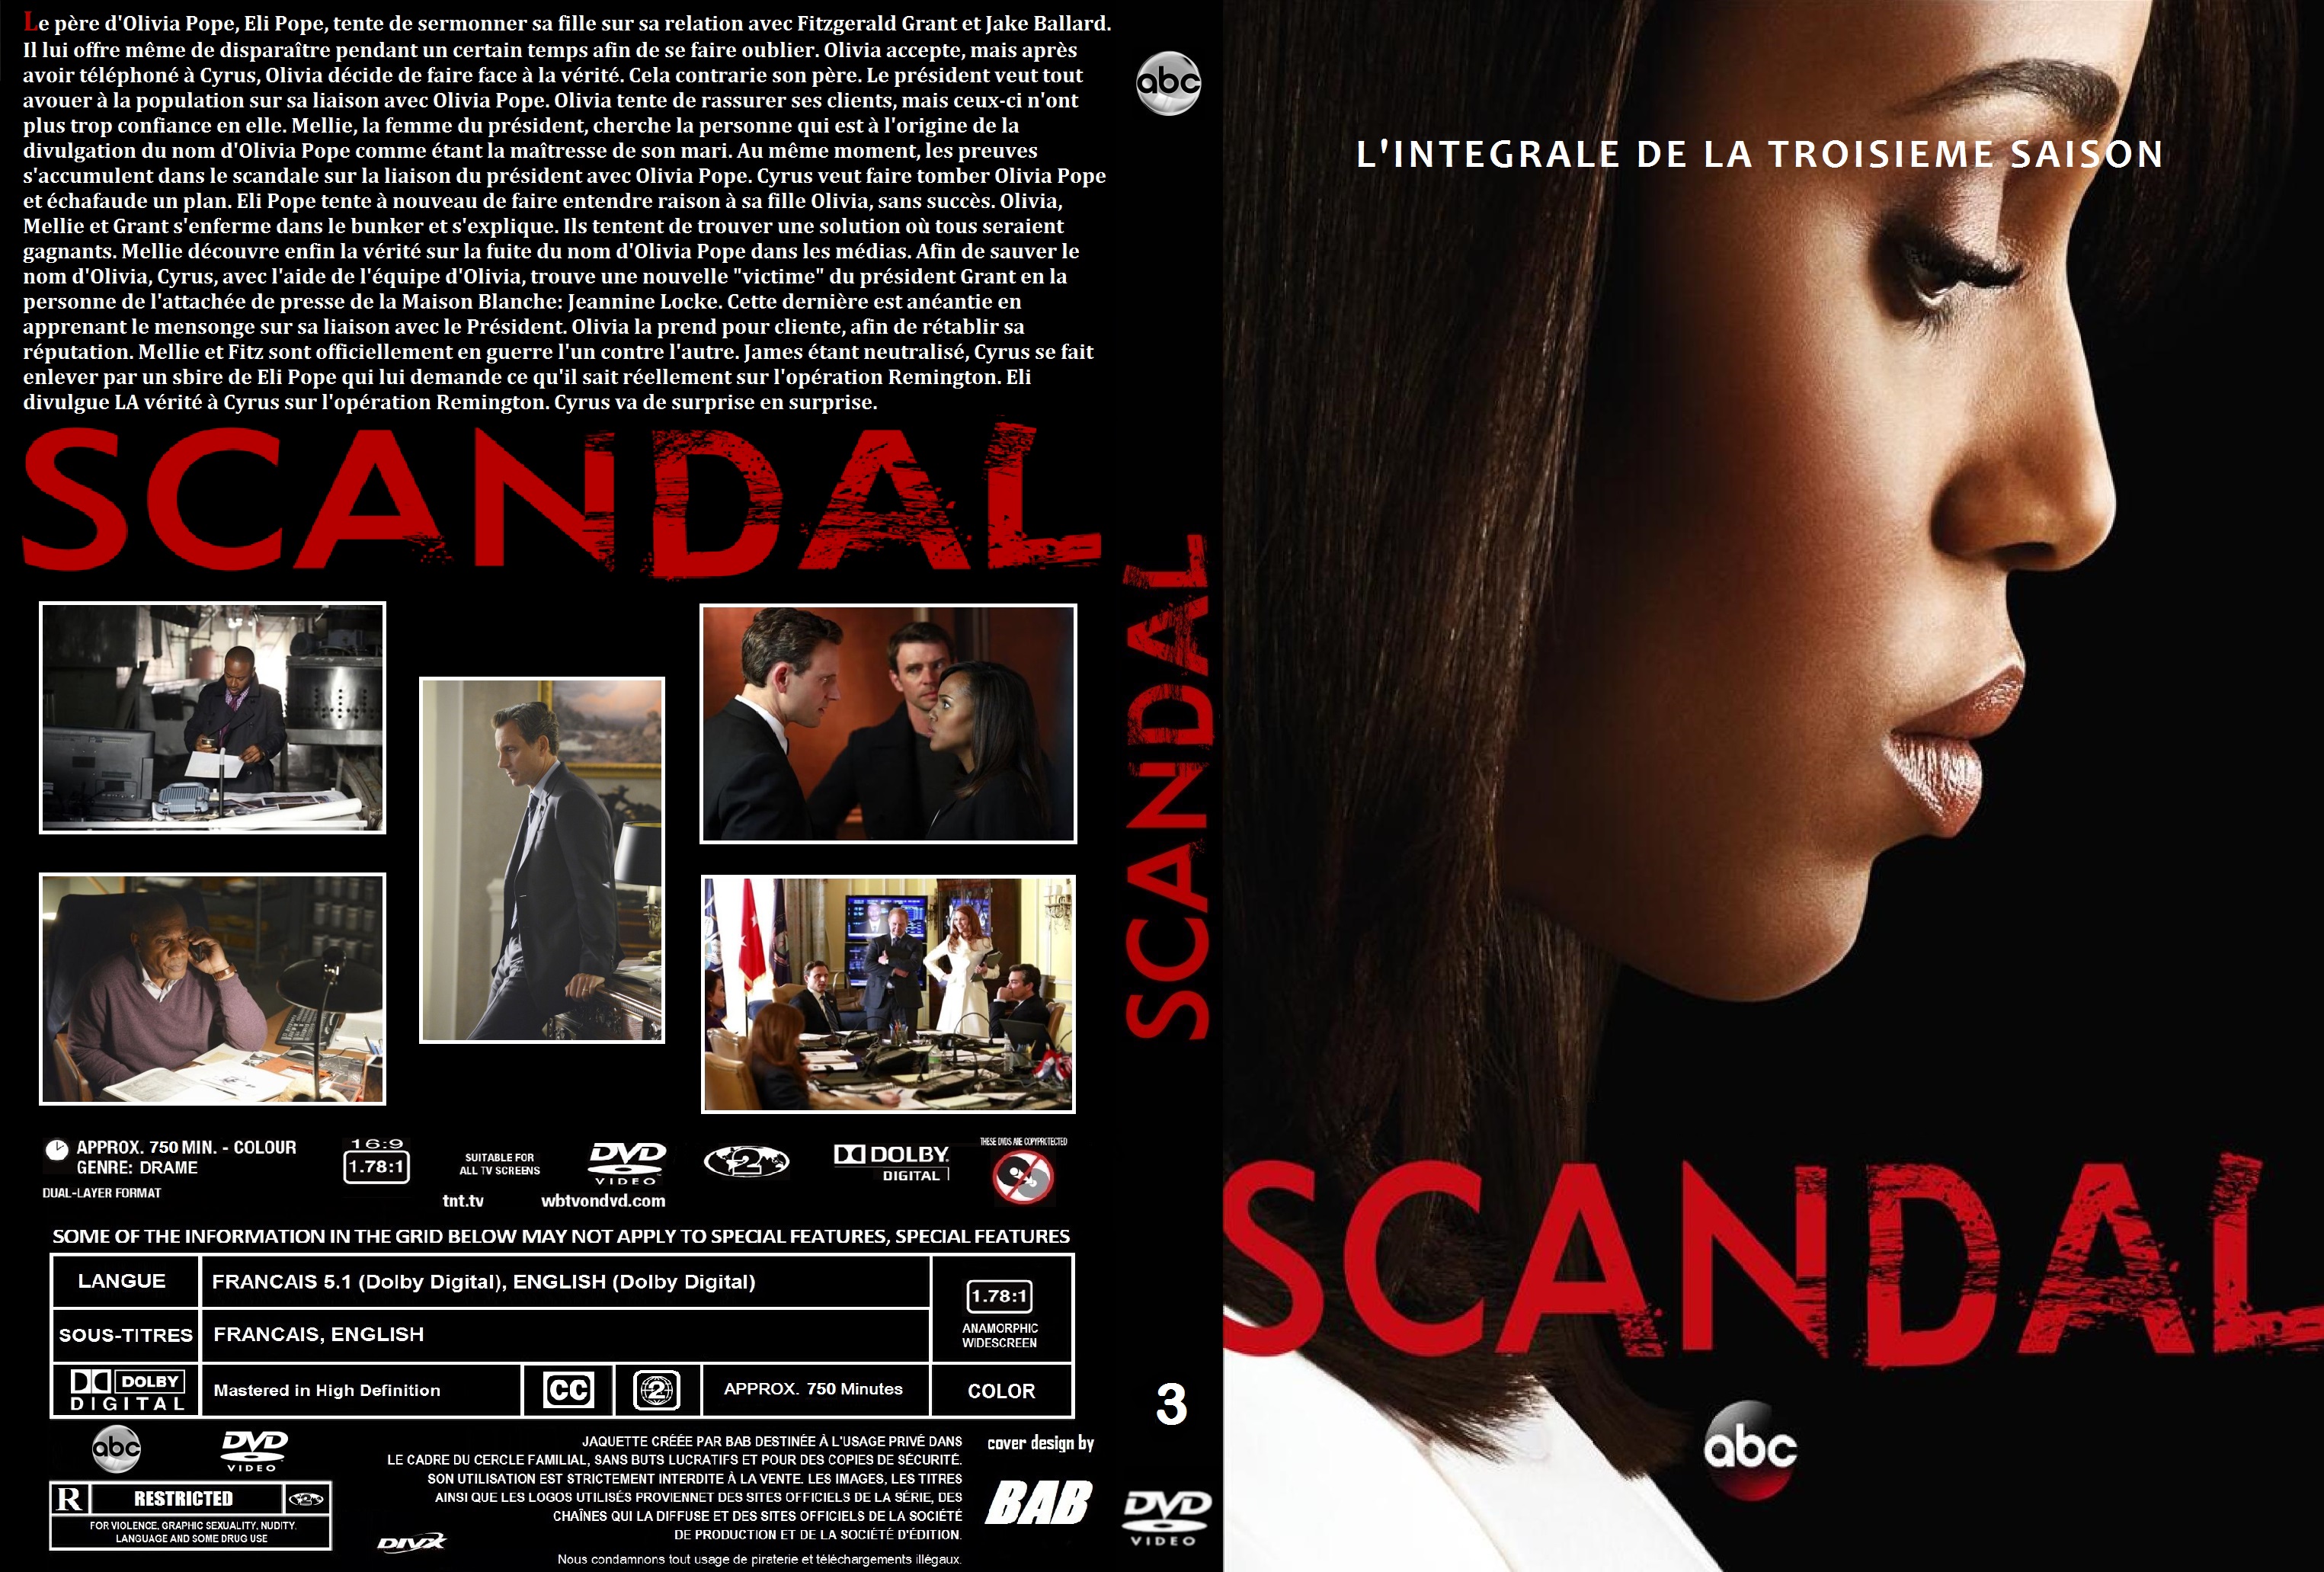 Jaquette DVD Scandal Saison 3 custom